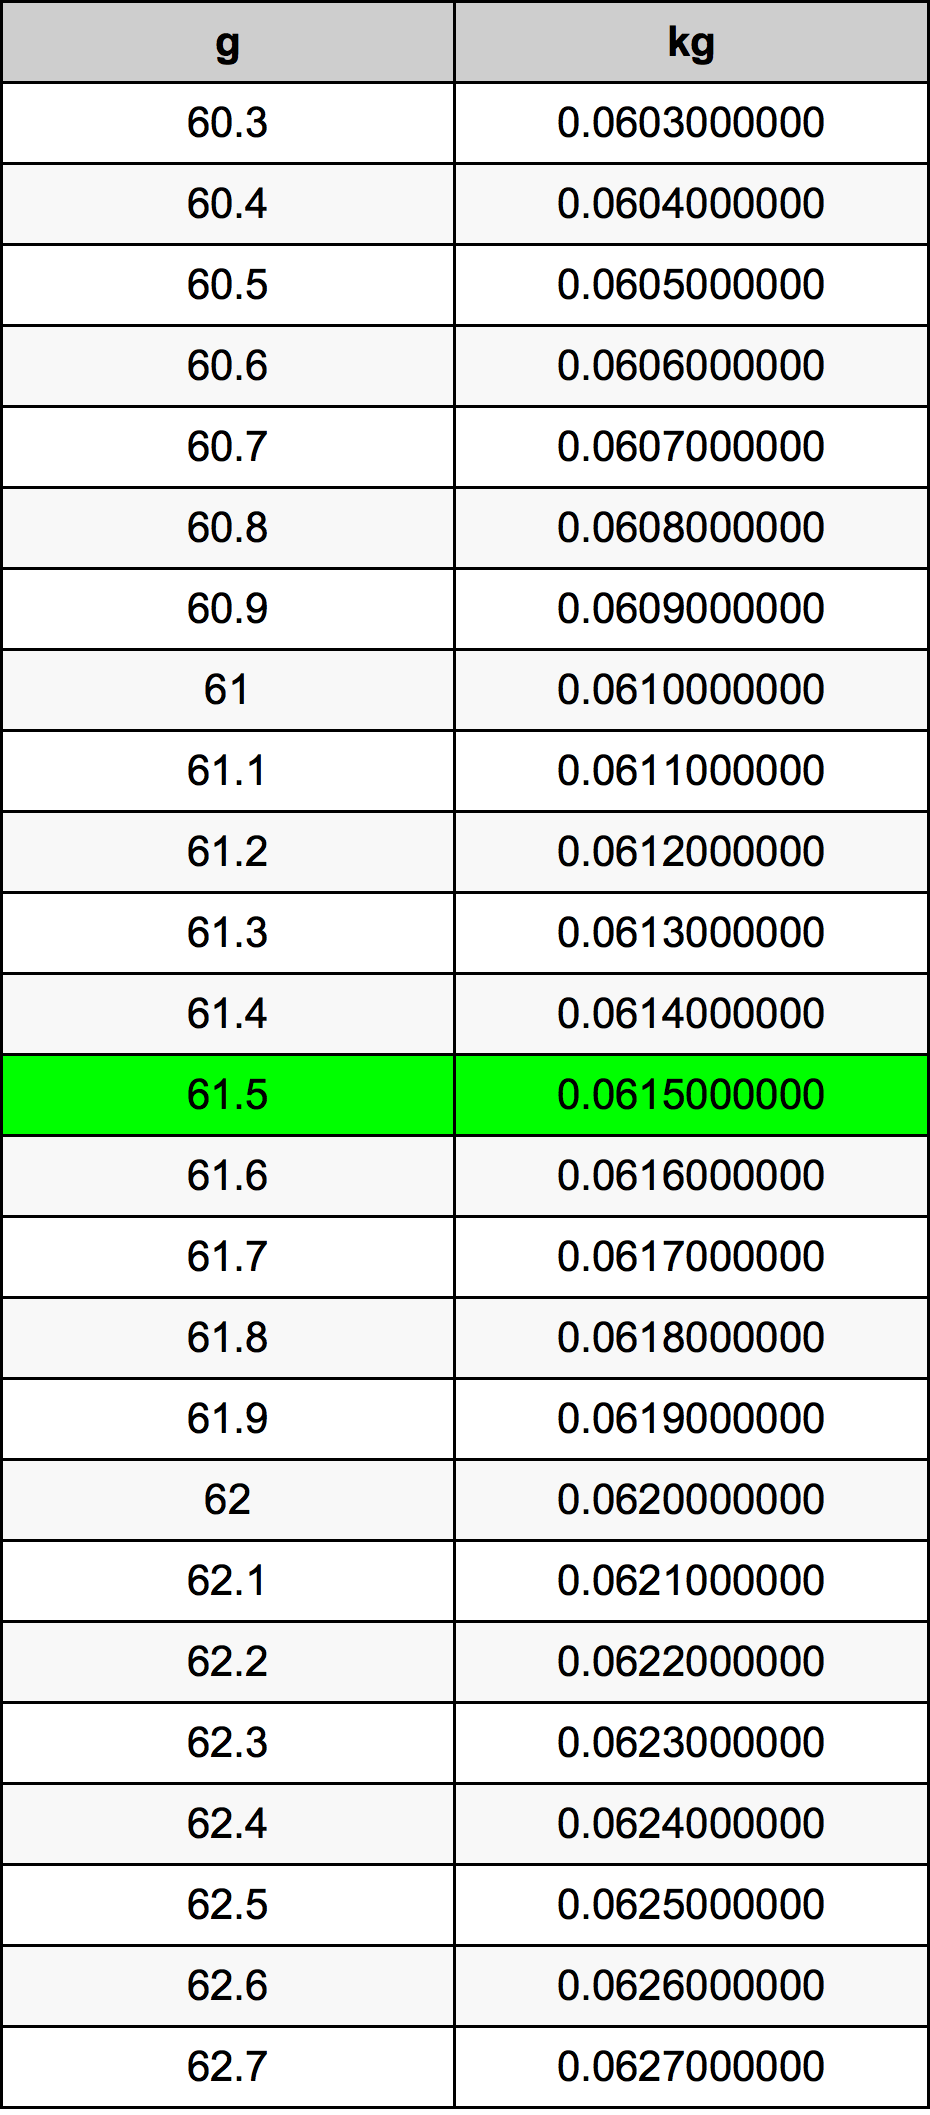 61.5 غرام جدول تحويل